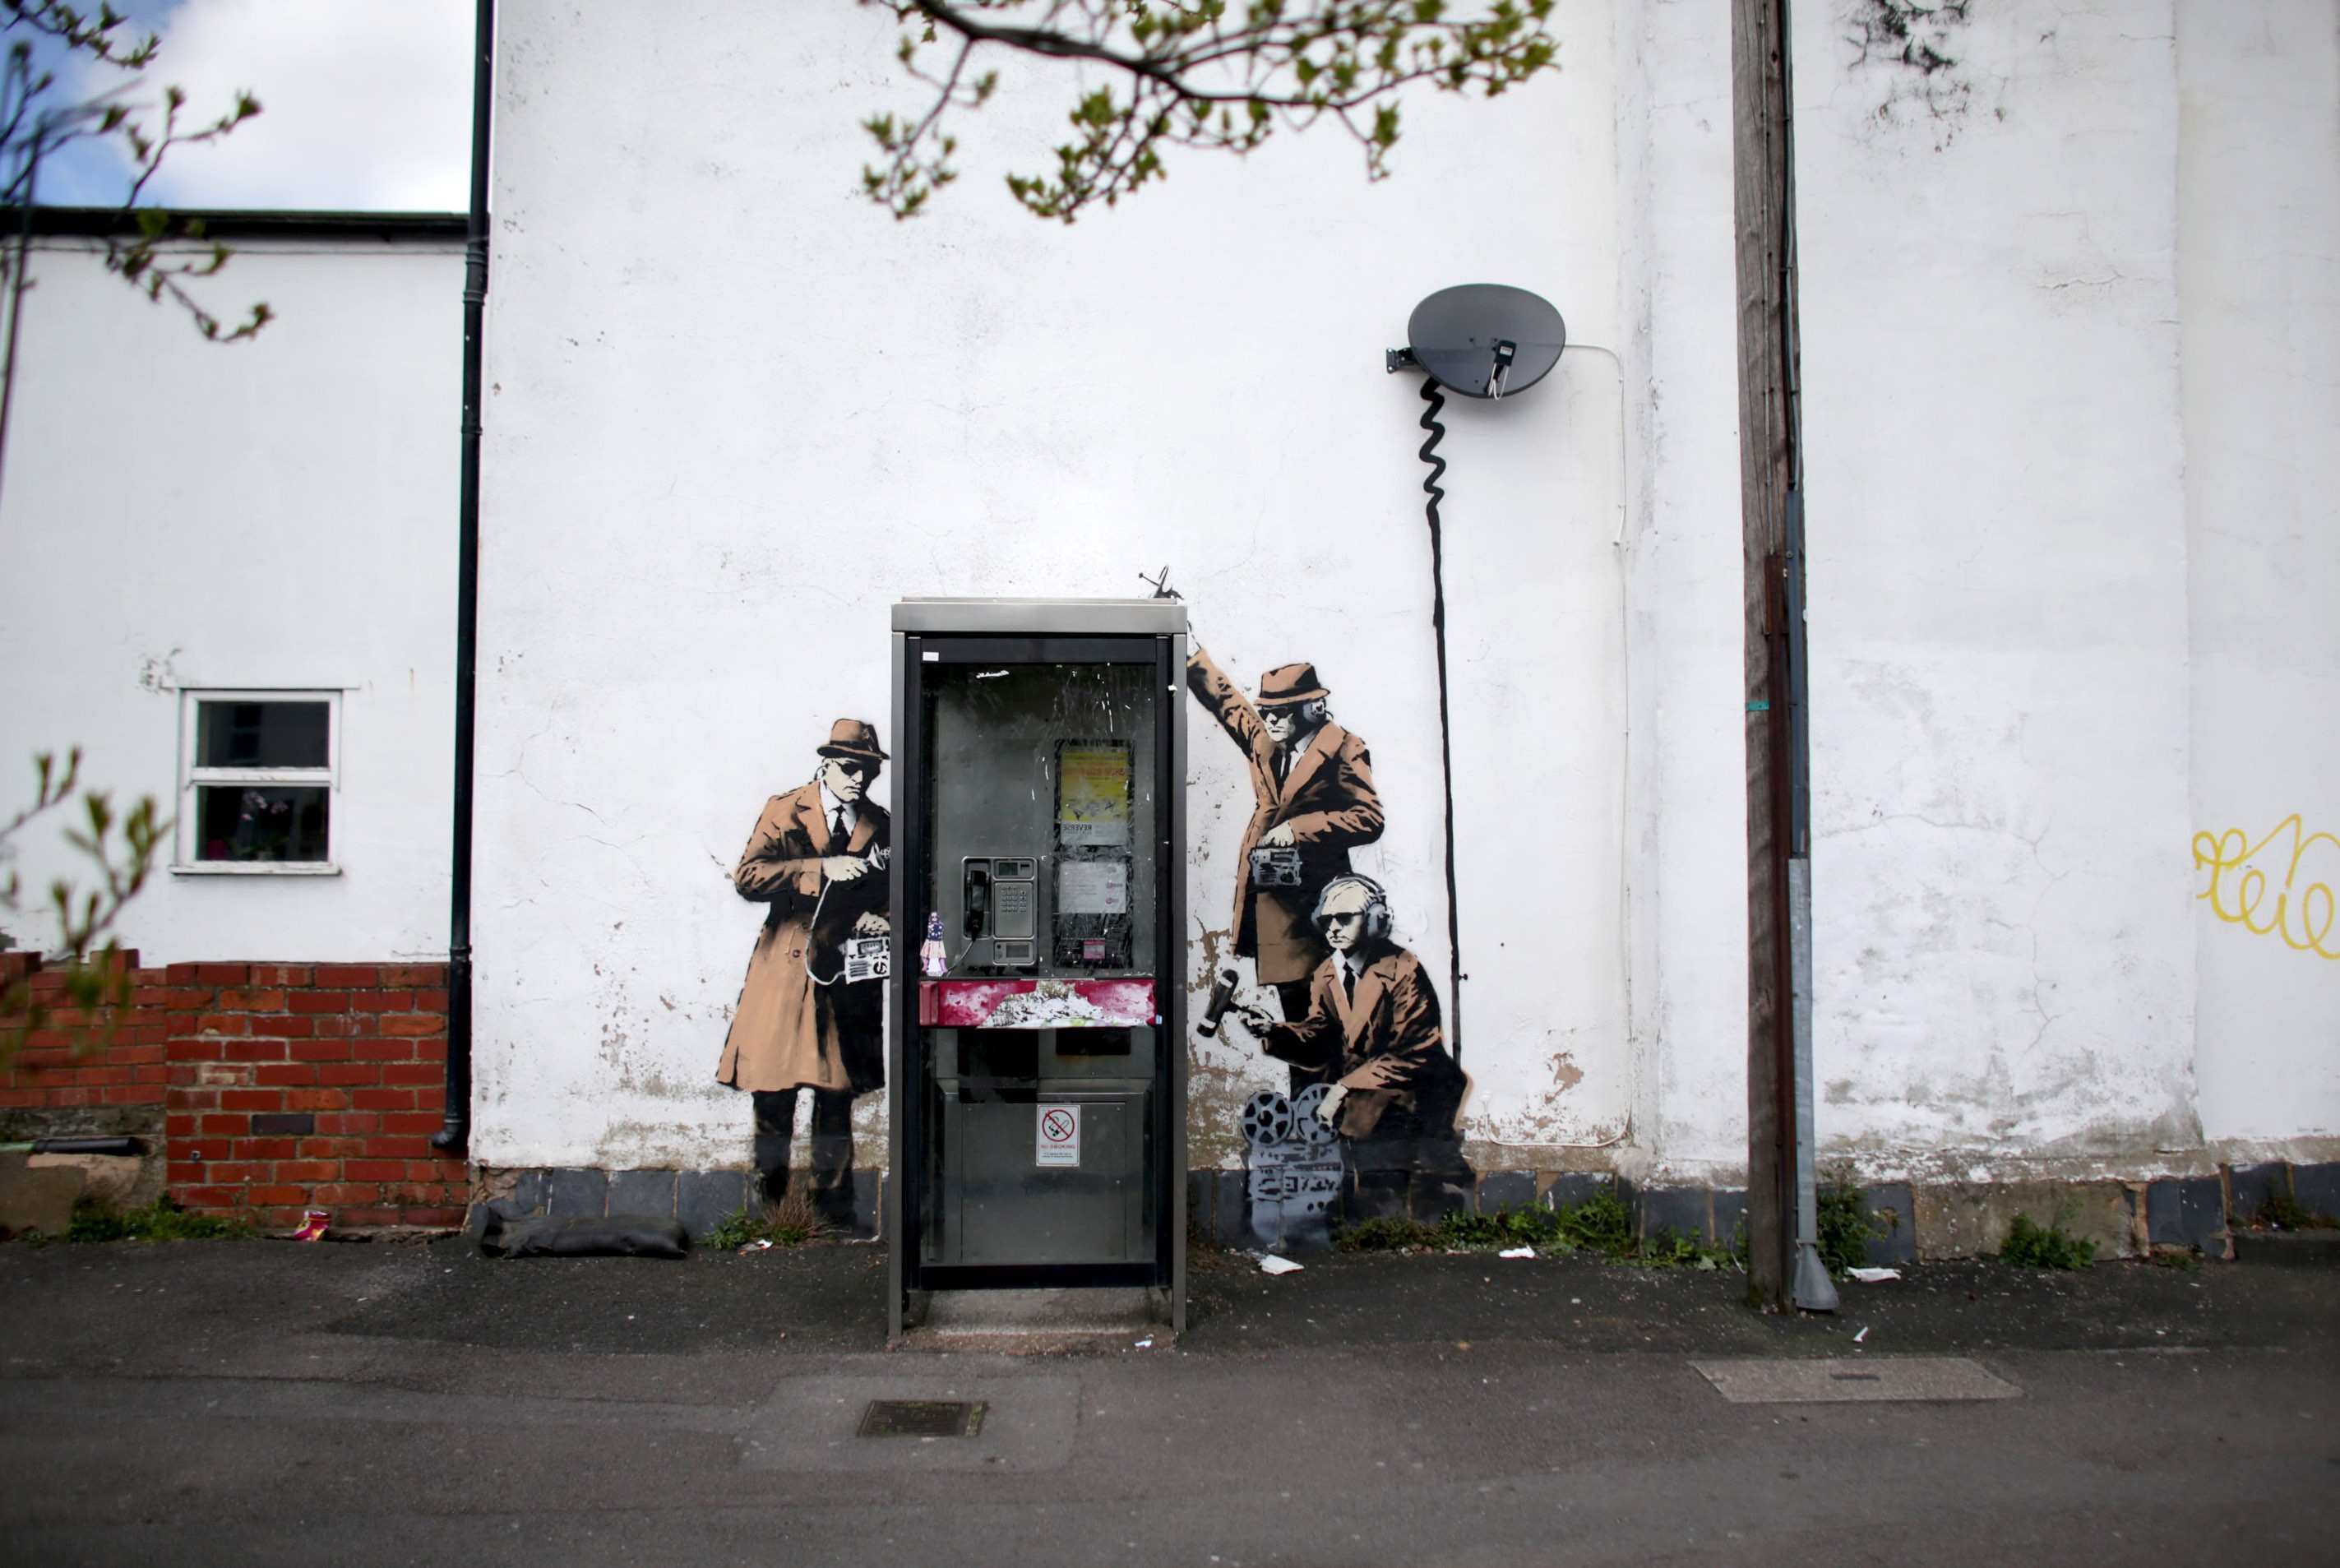 Graffitti de Banksy em Gloucestershire, Inglaterra, registrado em 2014. (Foto: Getty Images/ Matt Cardy)